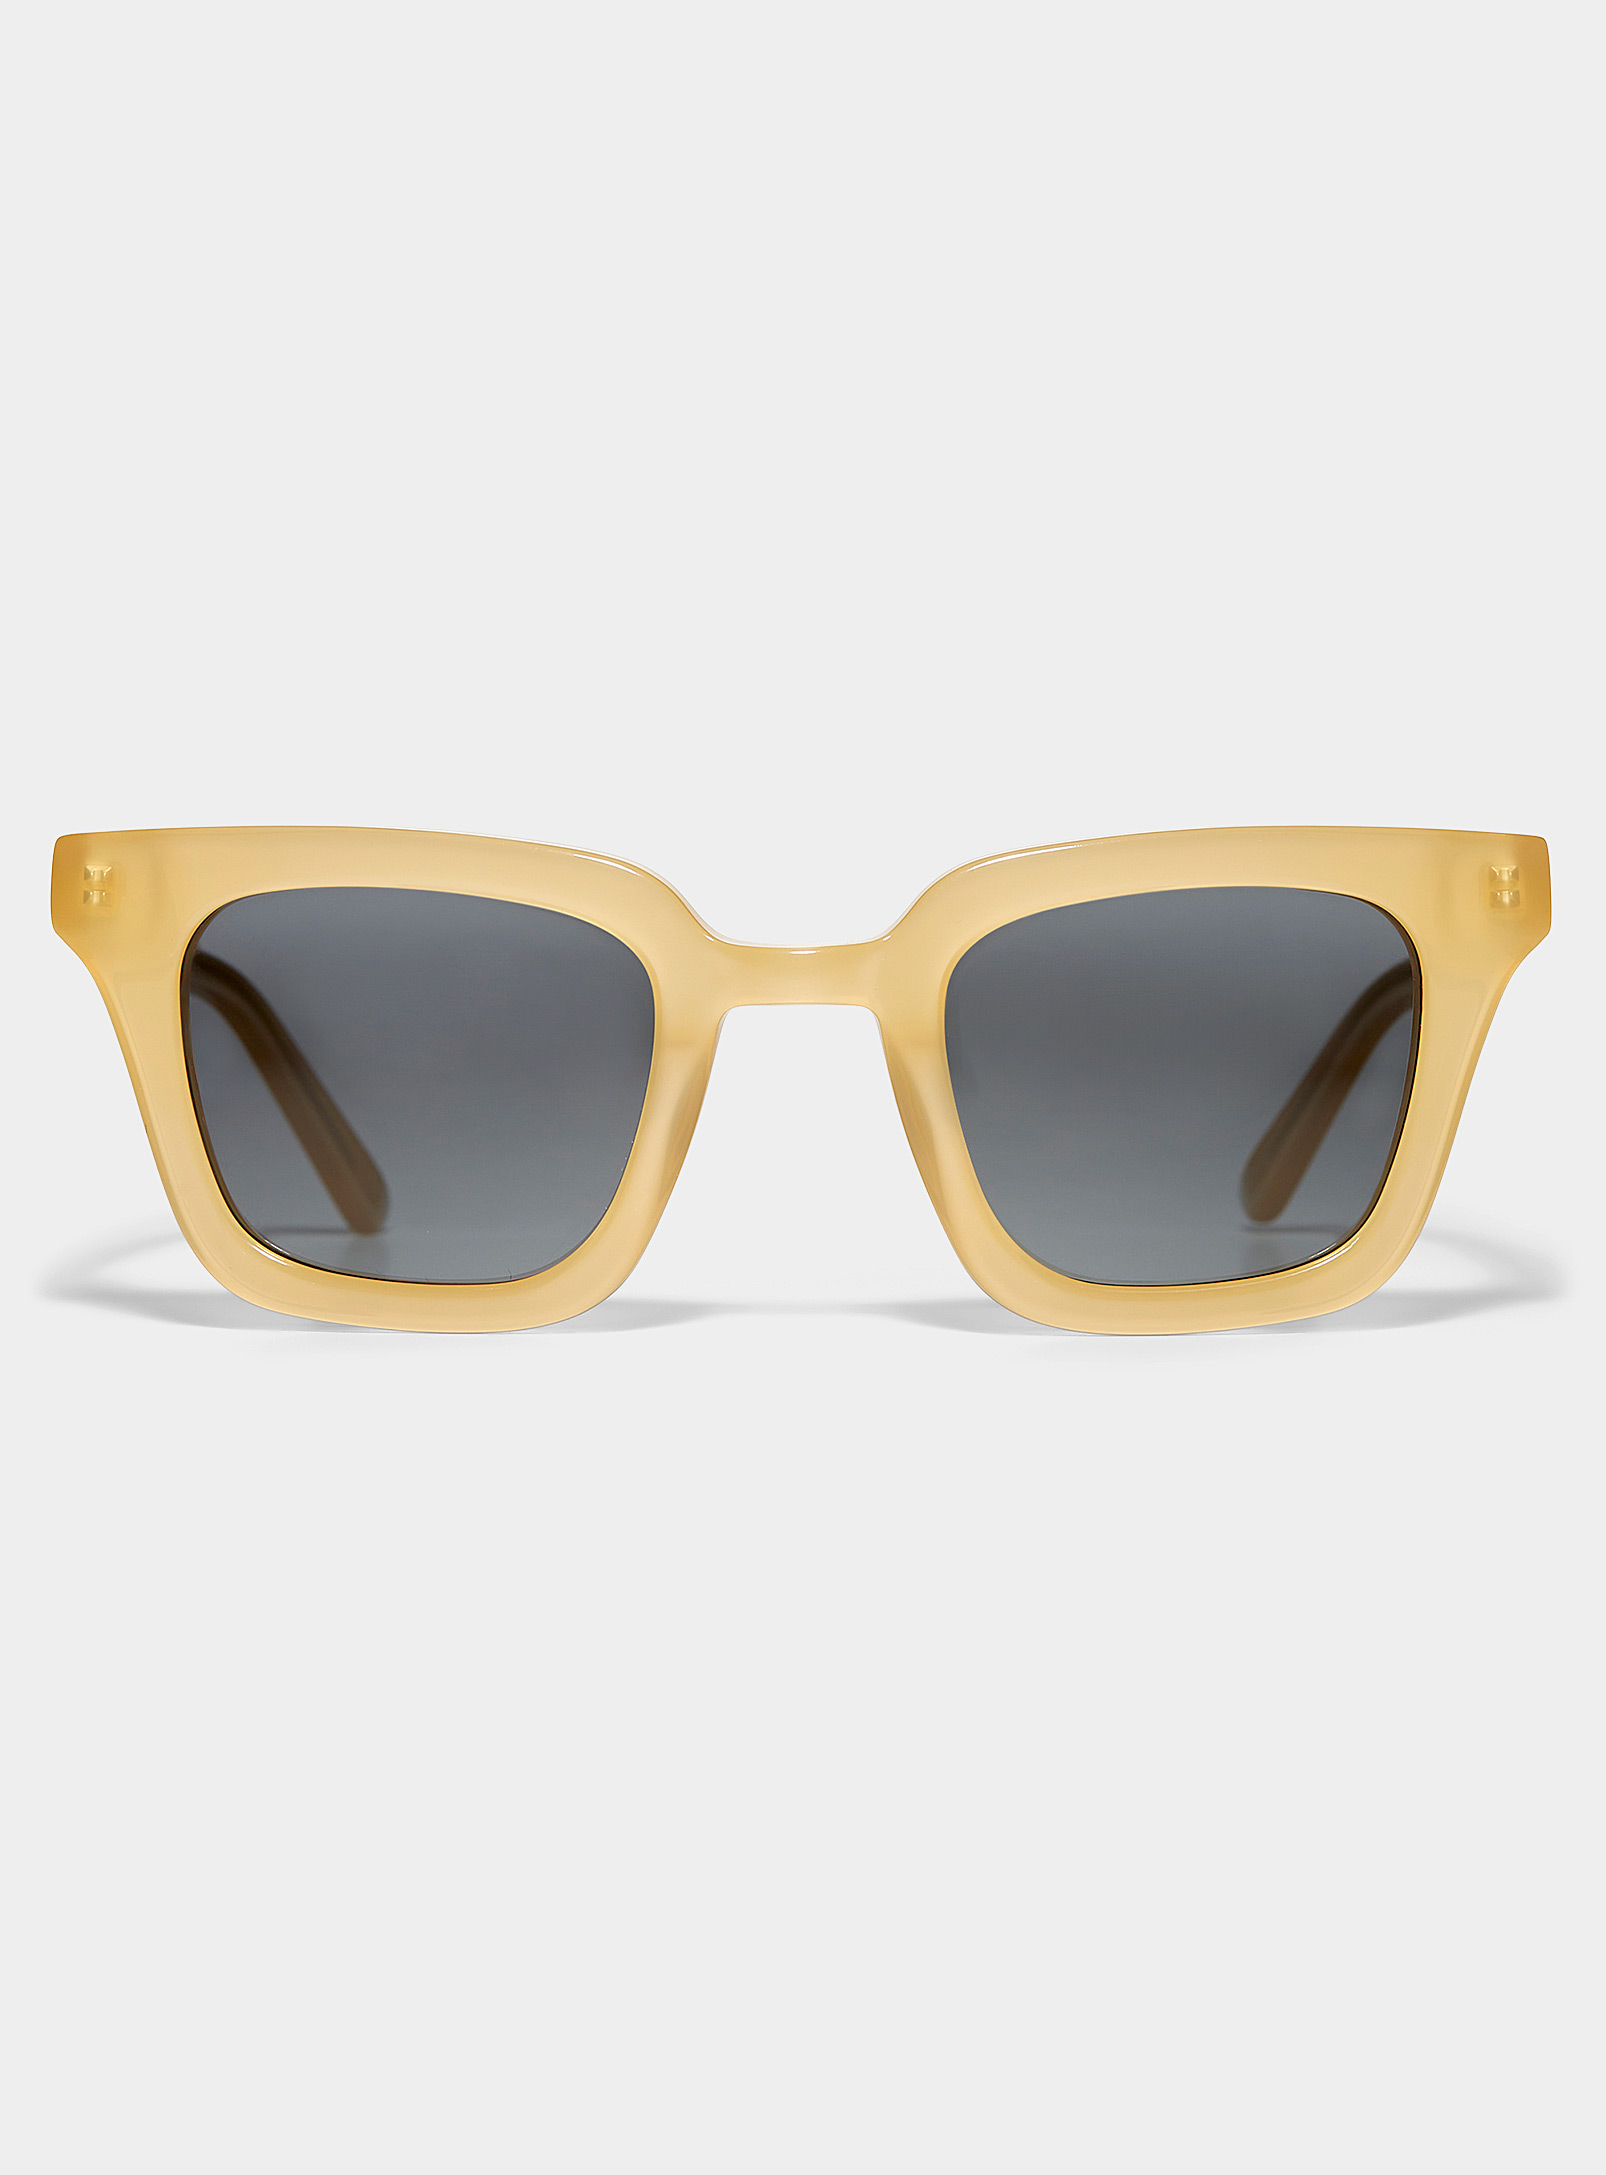 French Kiwis Ysee Square Tortoiseshell Sunglasses In Neutral